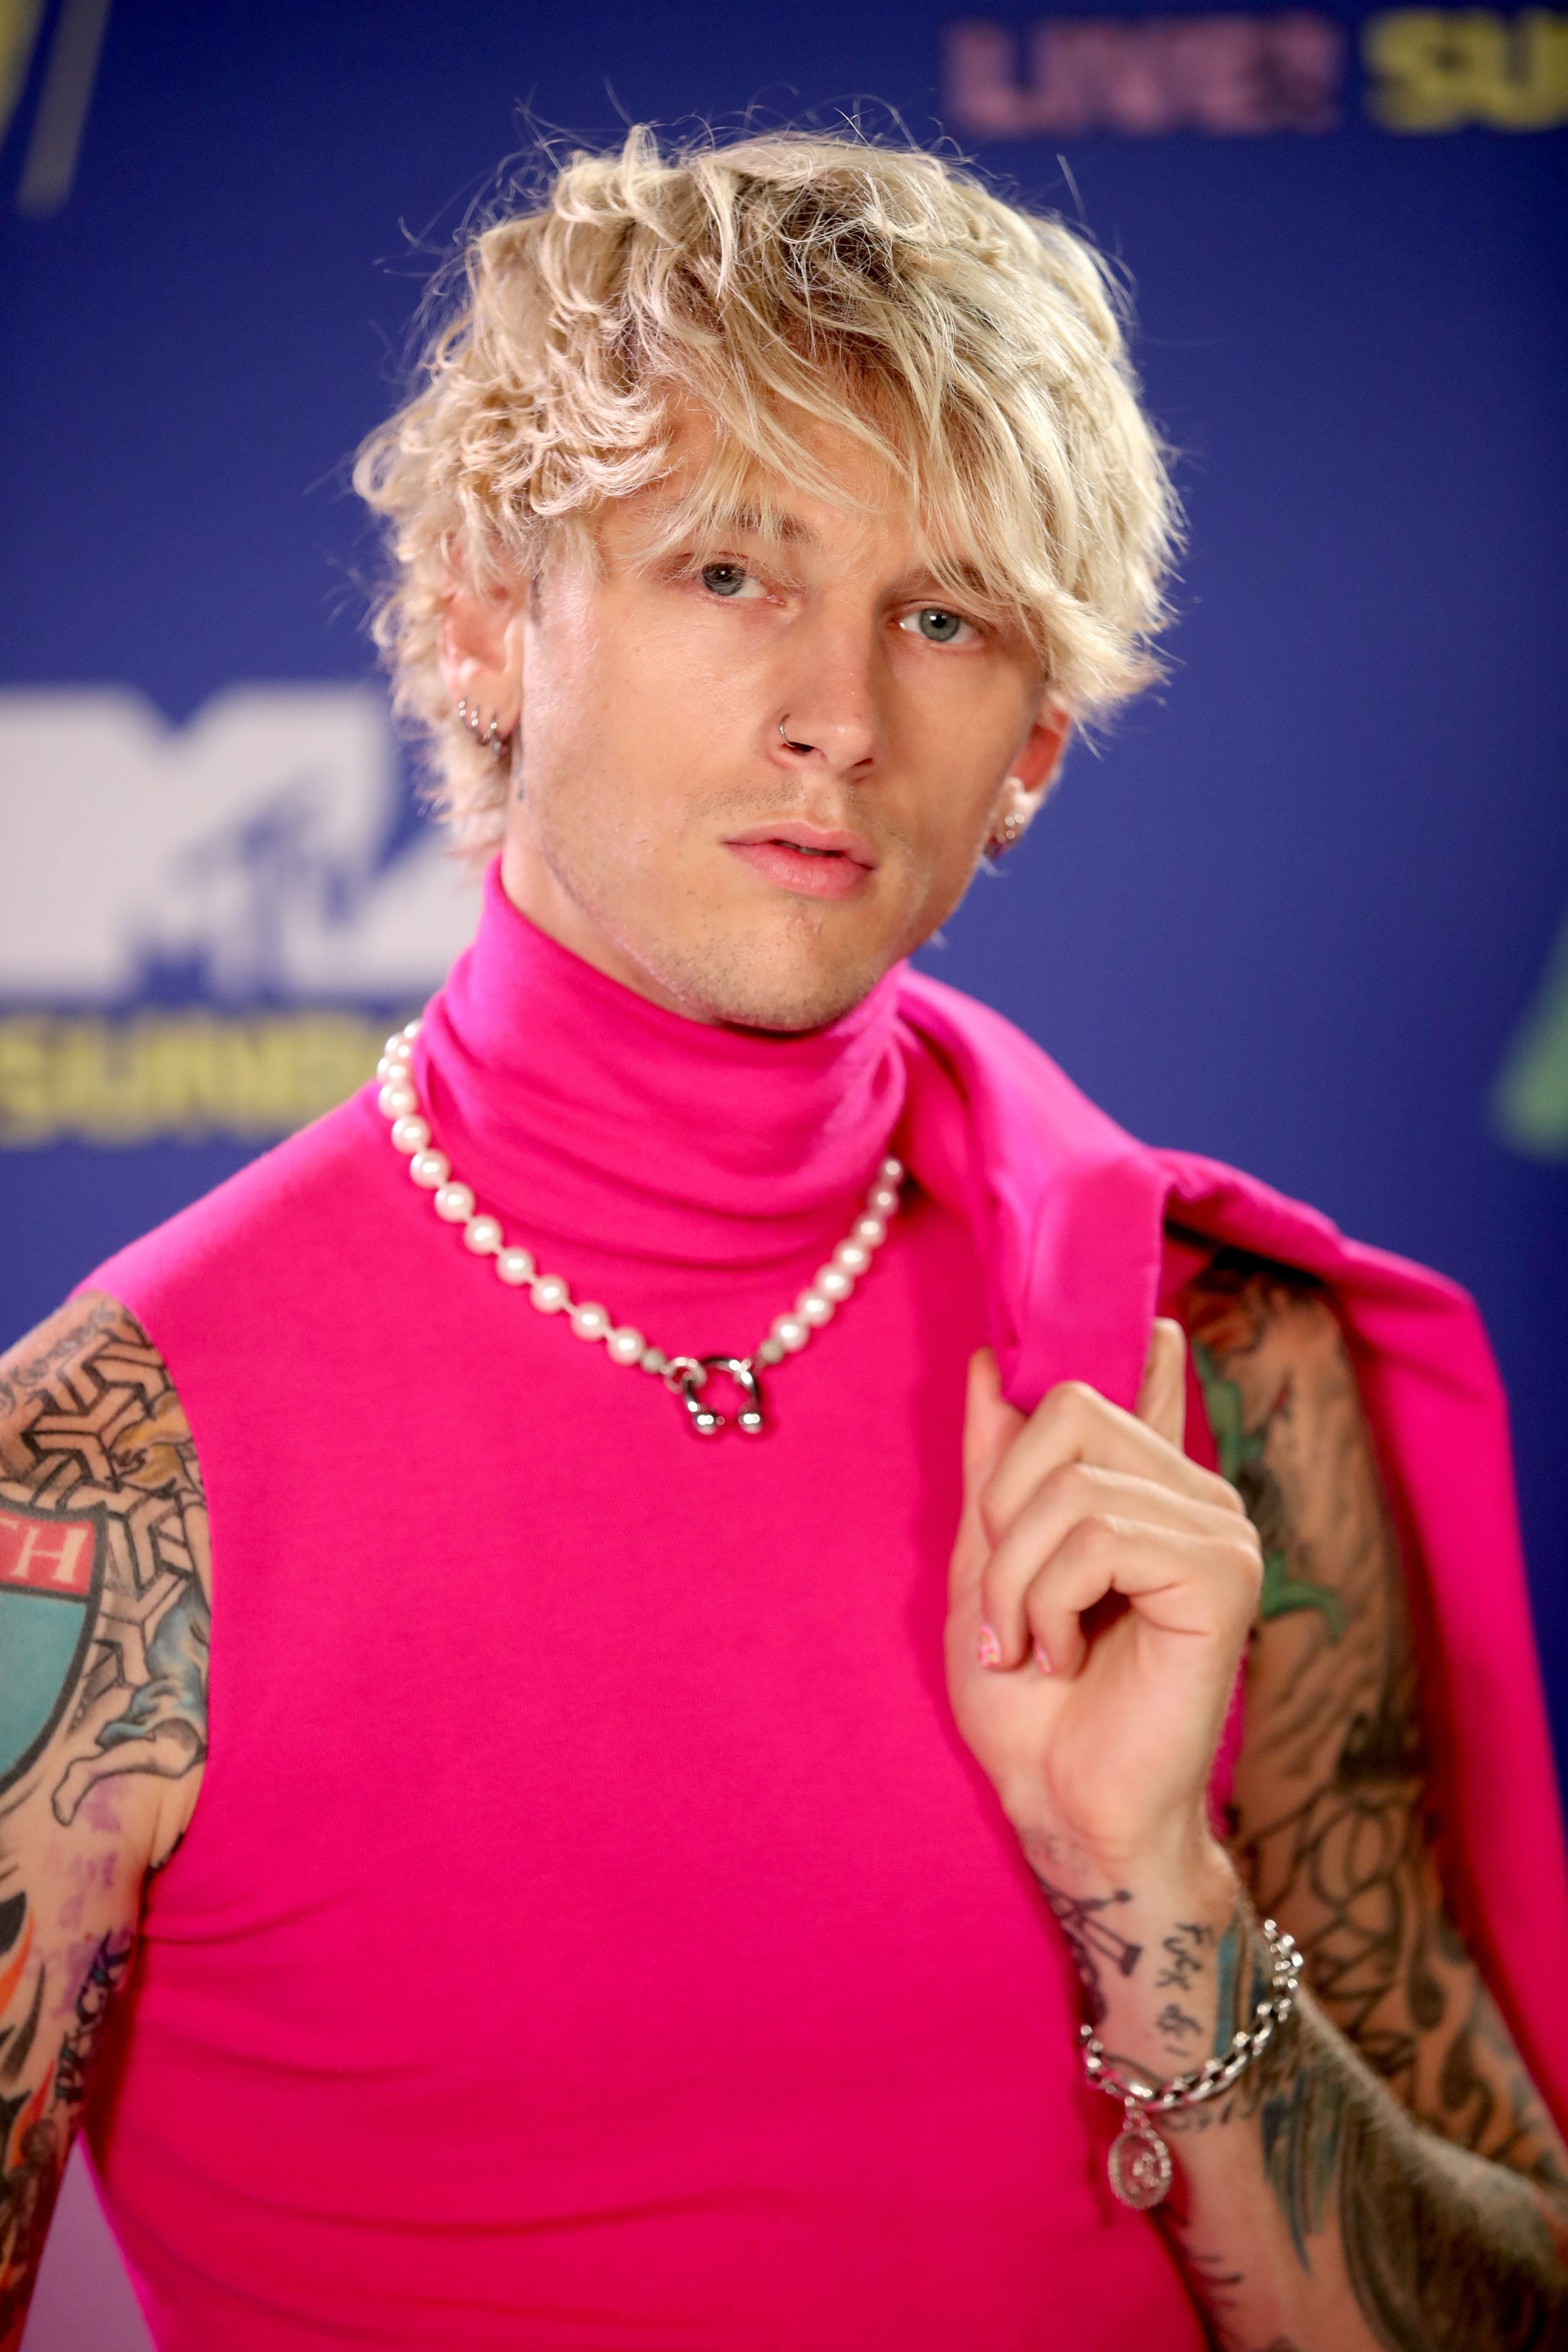 Machine Gun Kelly dyes his hair pink: Pics